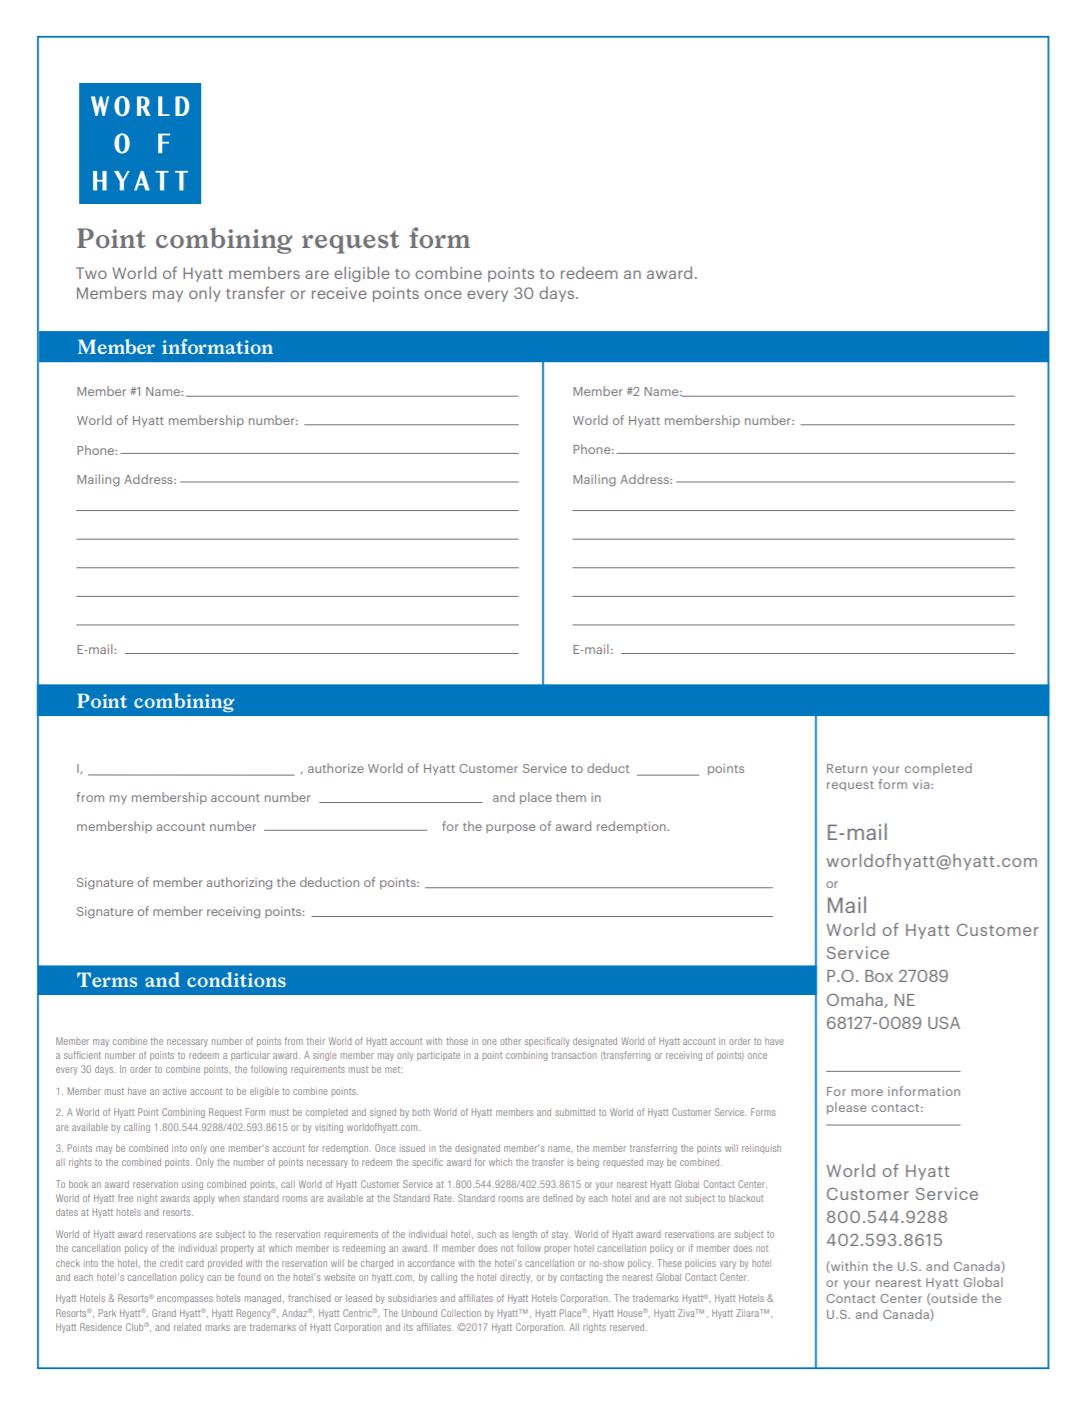 World of Hyatt points combining request form